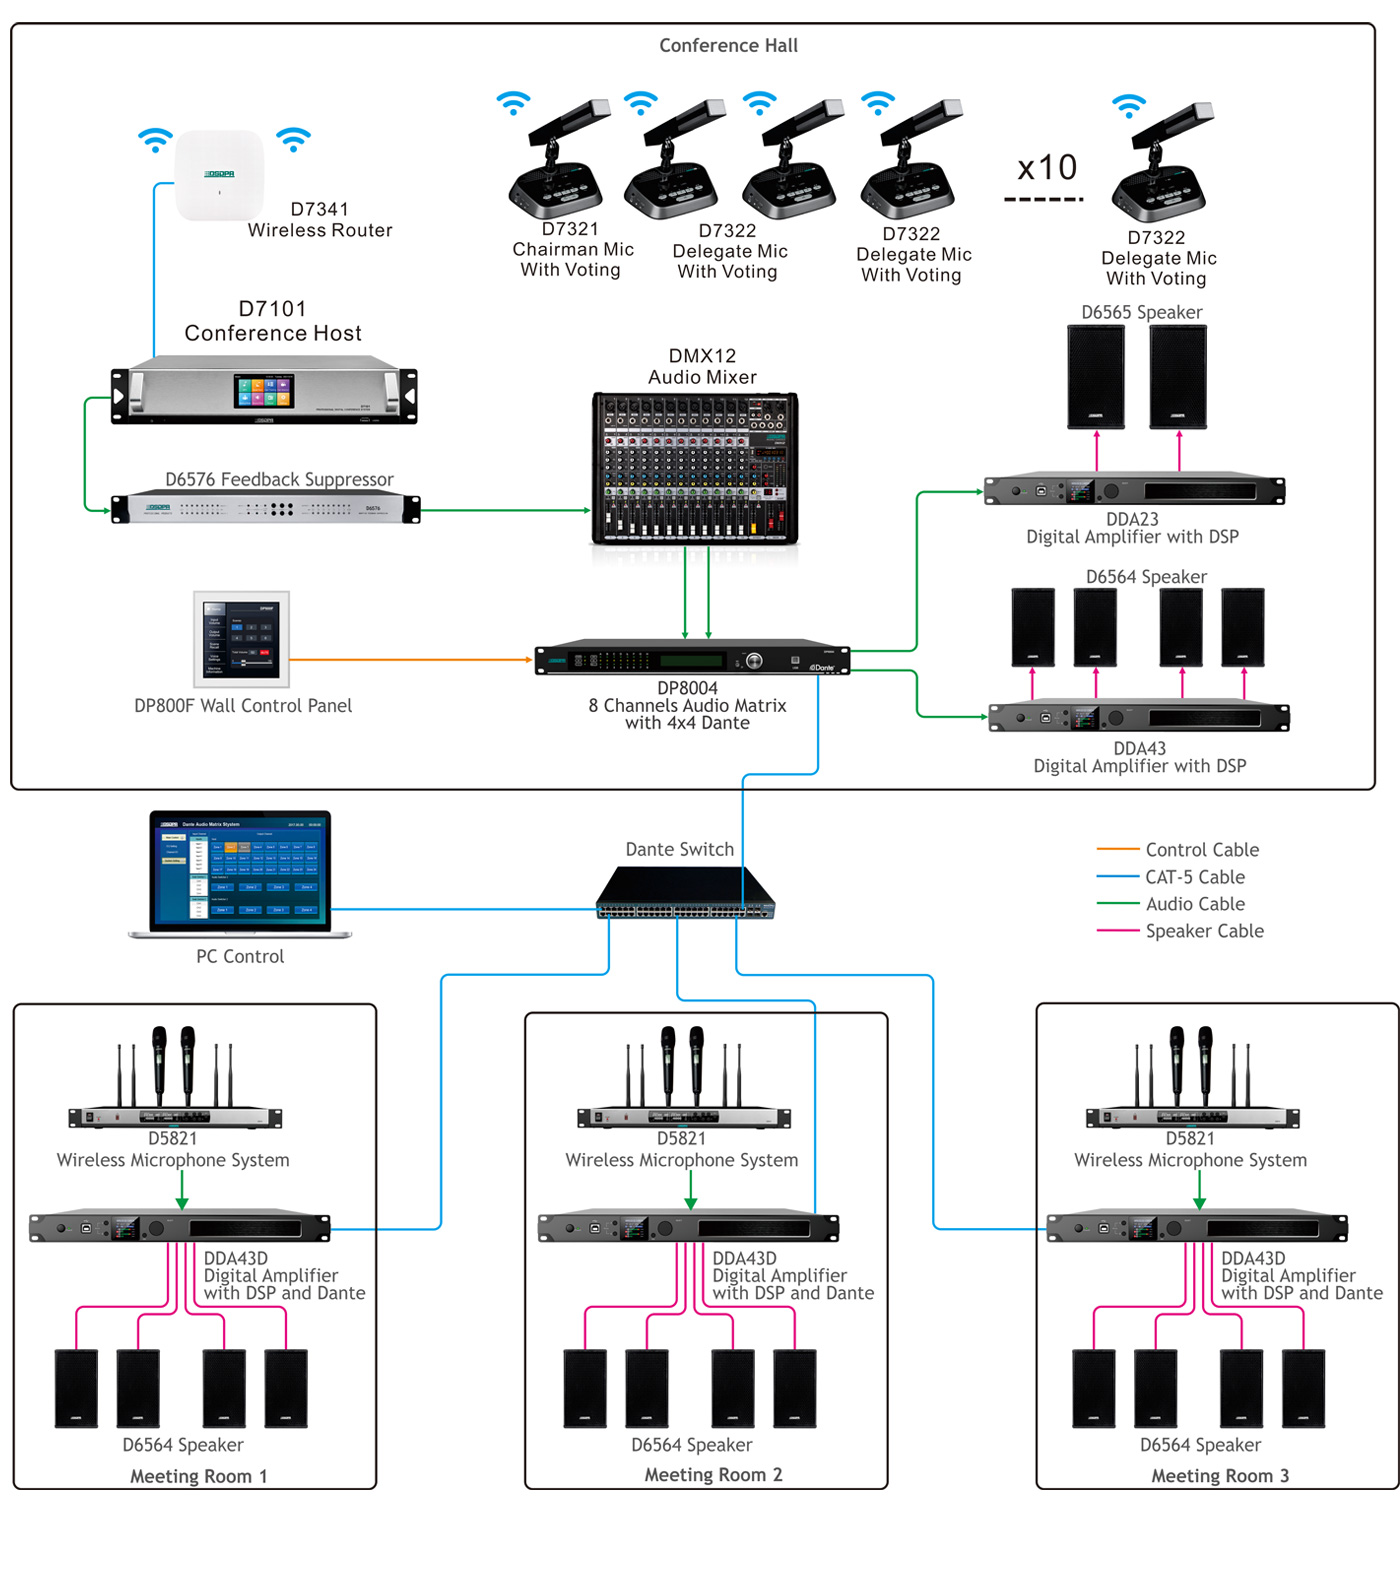 IP-Network-Digital-Amplifier-with-DSP-and-Dante-diagram.jpg